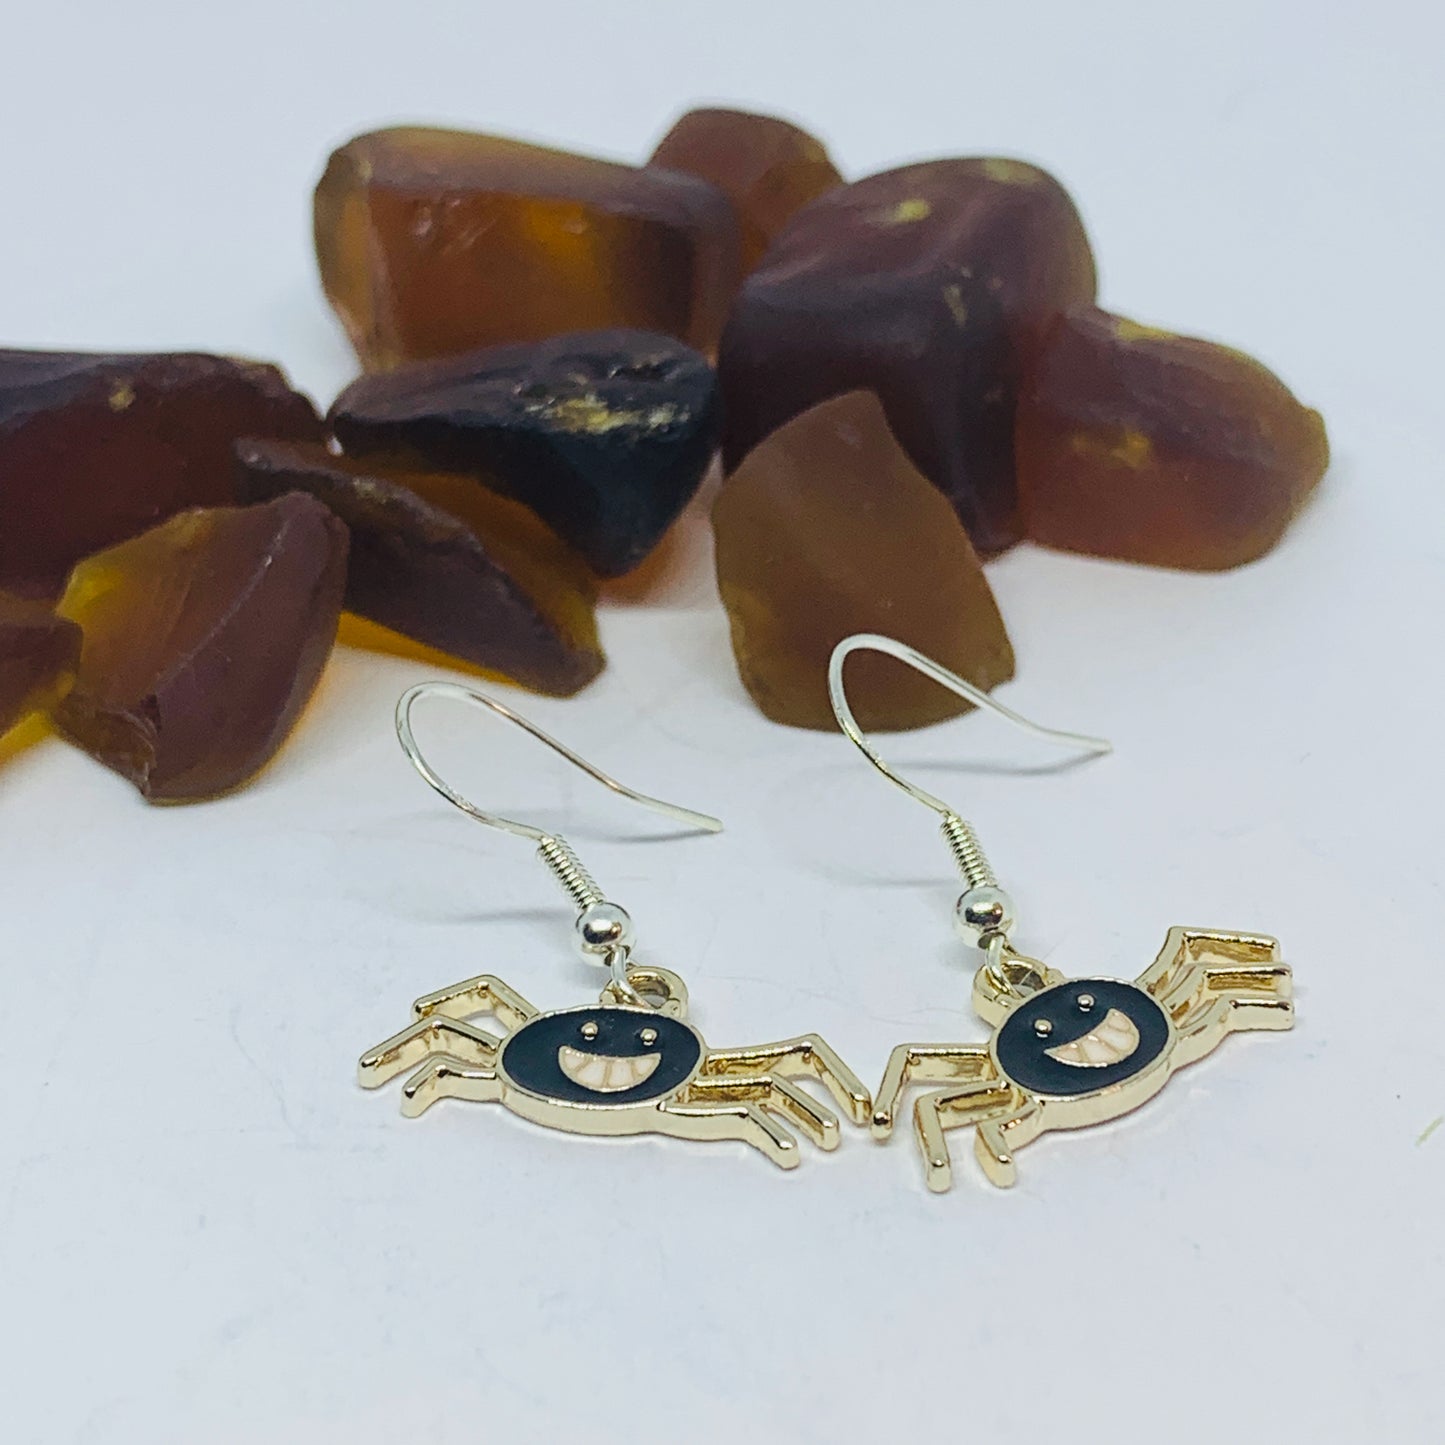 Black Spider Enamel Earrings with Silver Wires and Backs | Arachnid Earrings | Fall Jewelry | Spider Earrings | Halloween Earrings